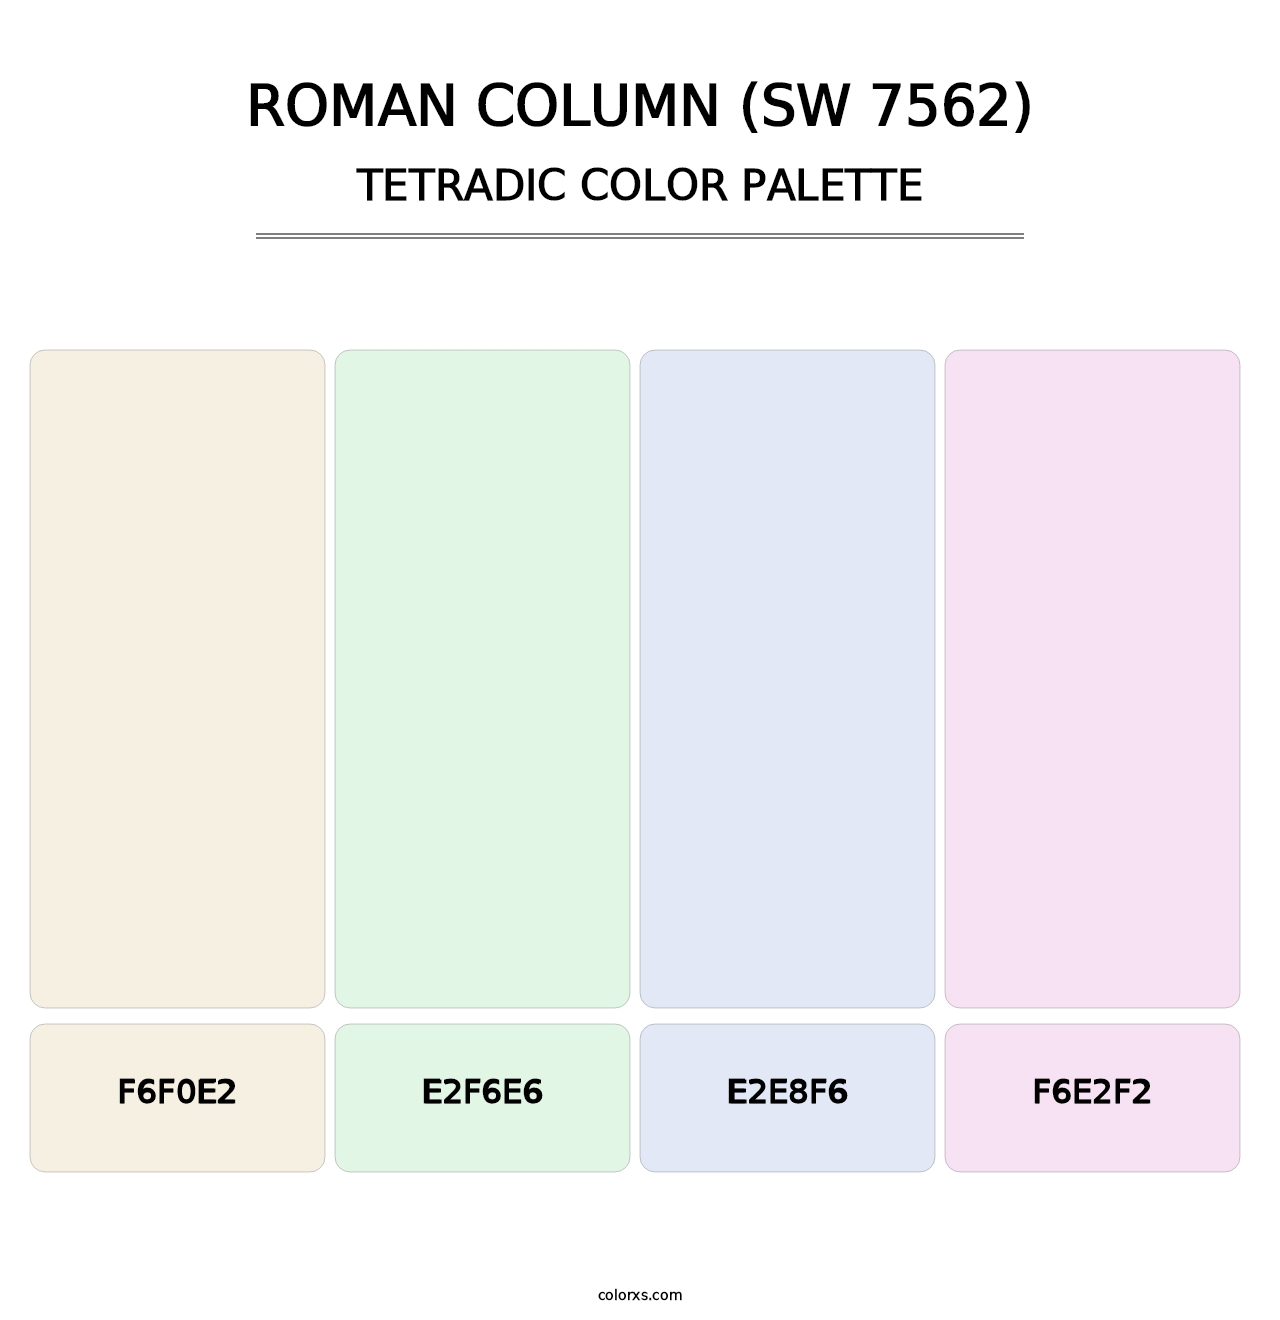 Roman Column (SW 7562) - Tetradic Color Palette